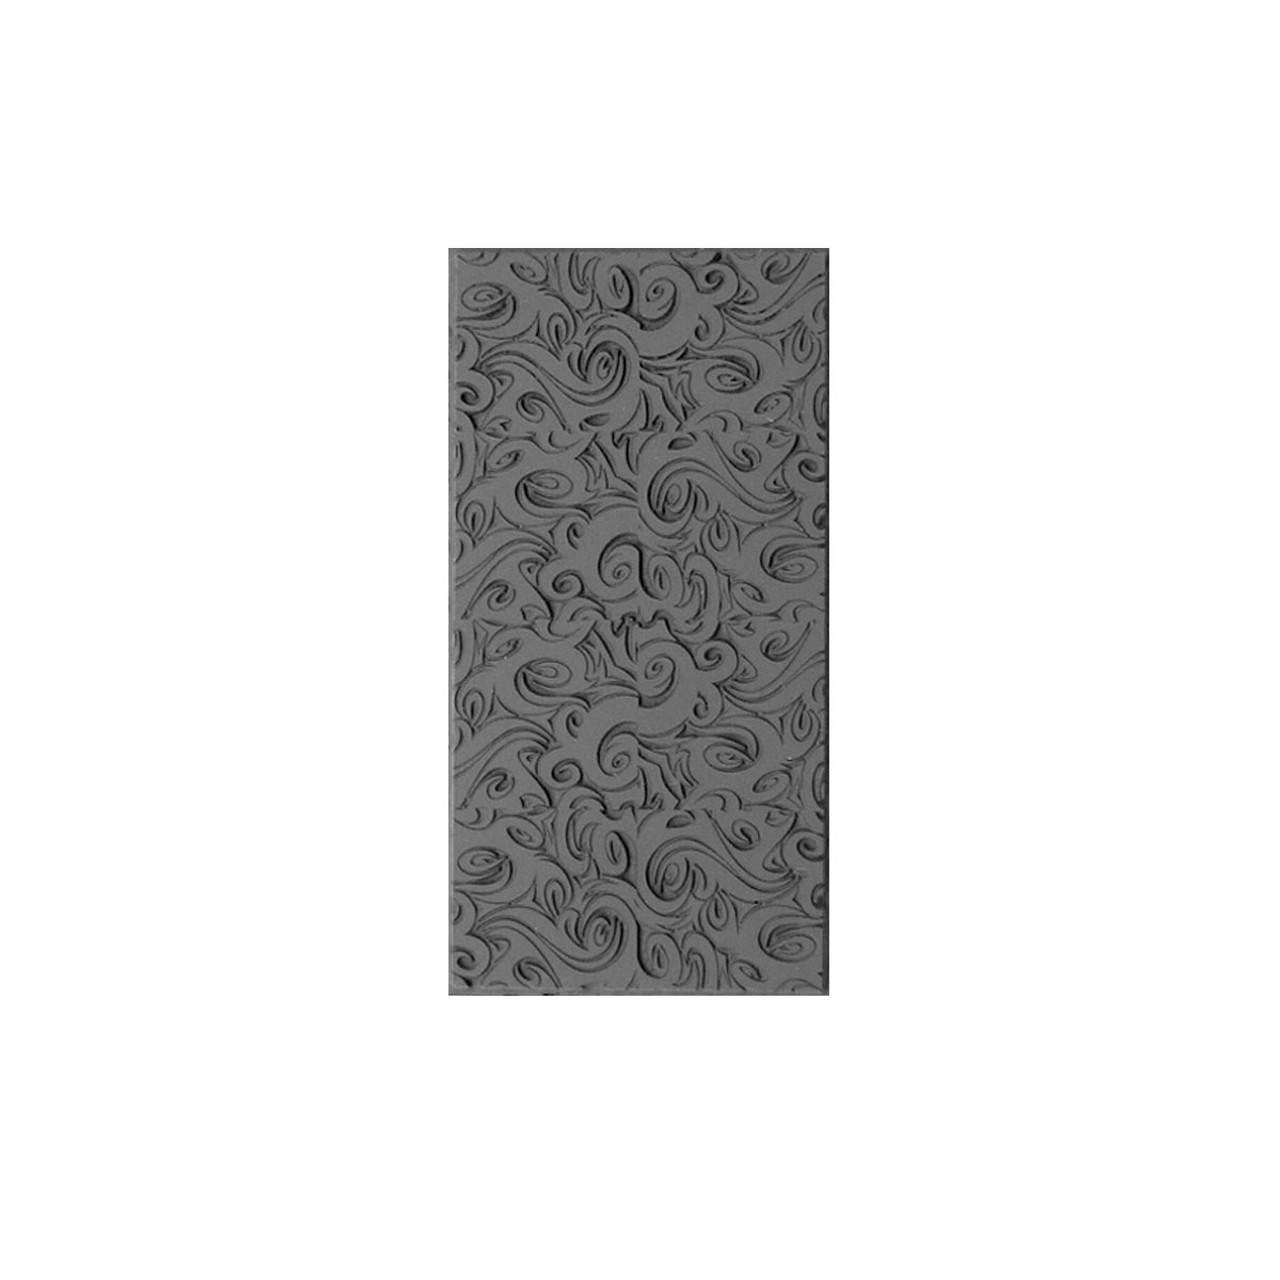 Texture Tile - Tribal Swirls